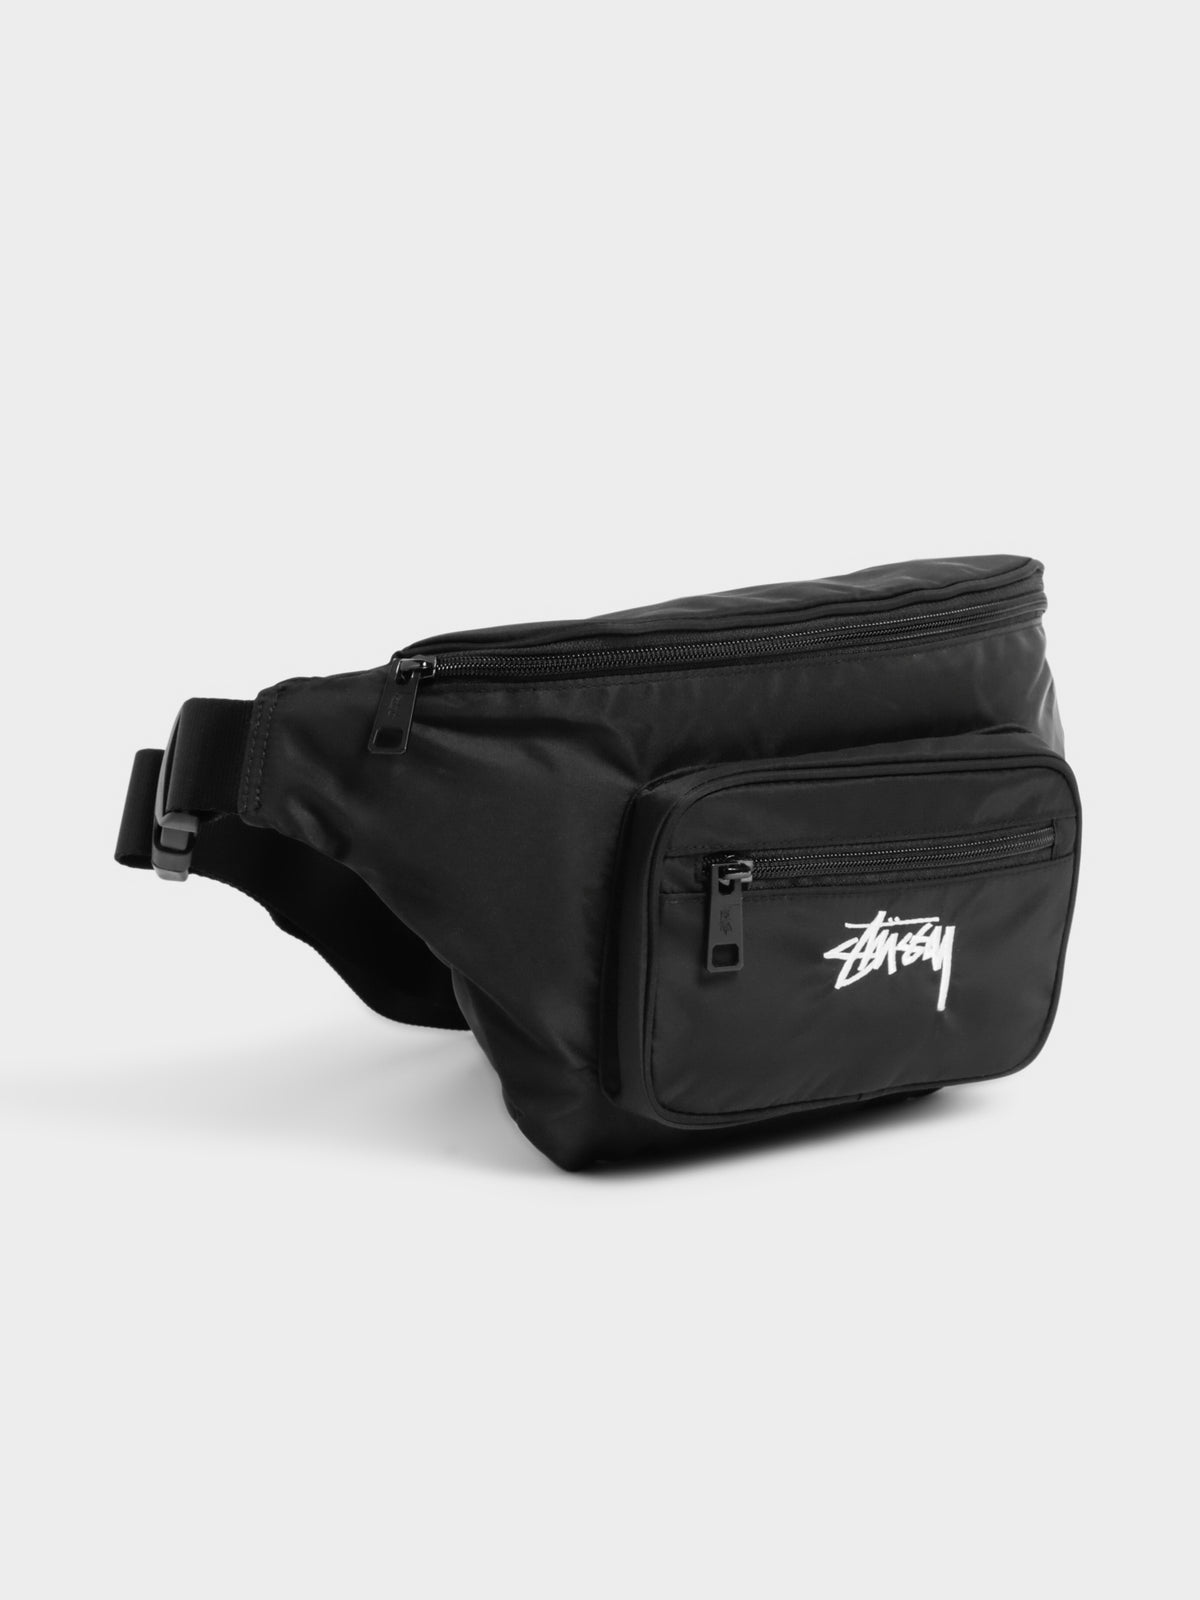 Stock Pocket Waist Bag in Black